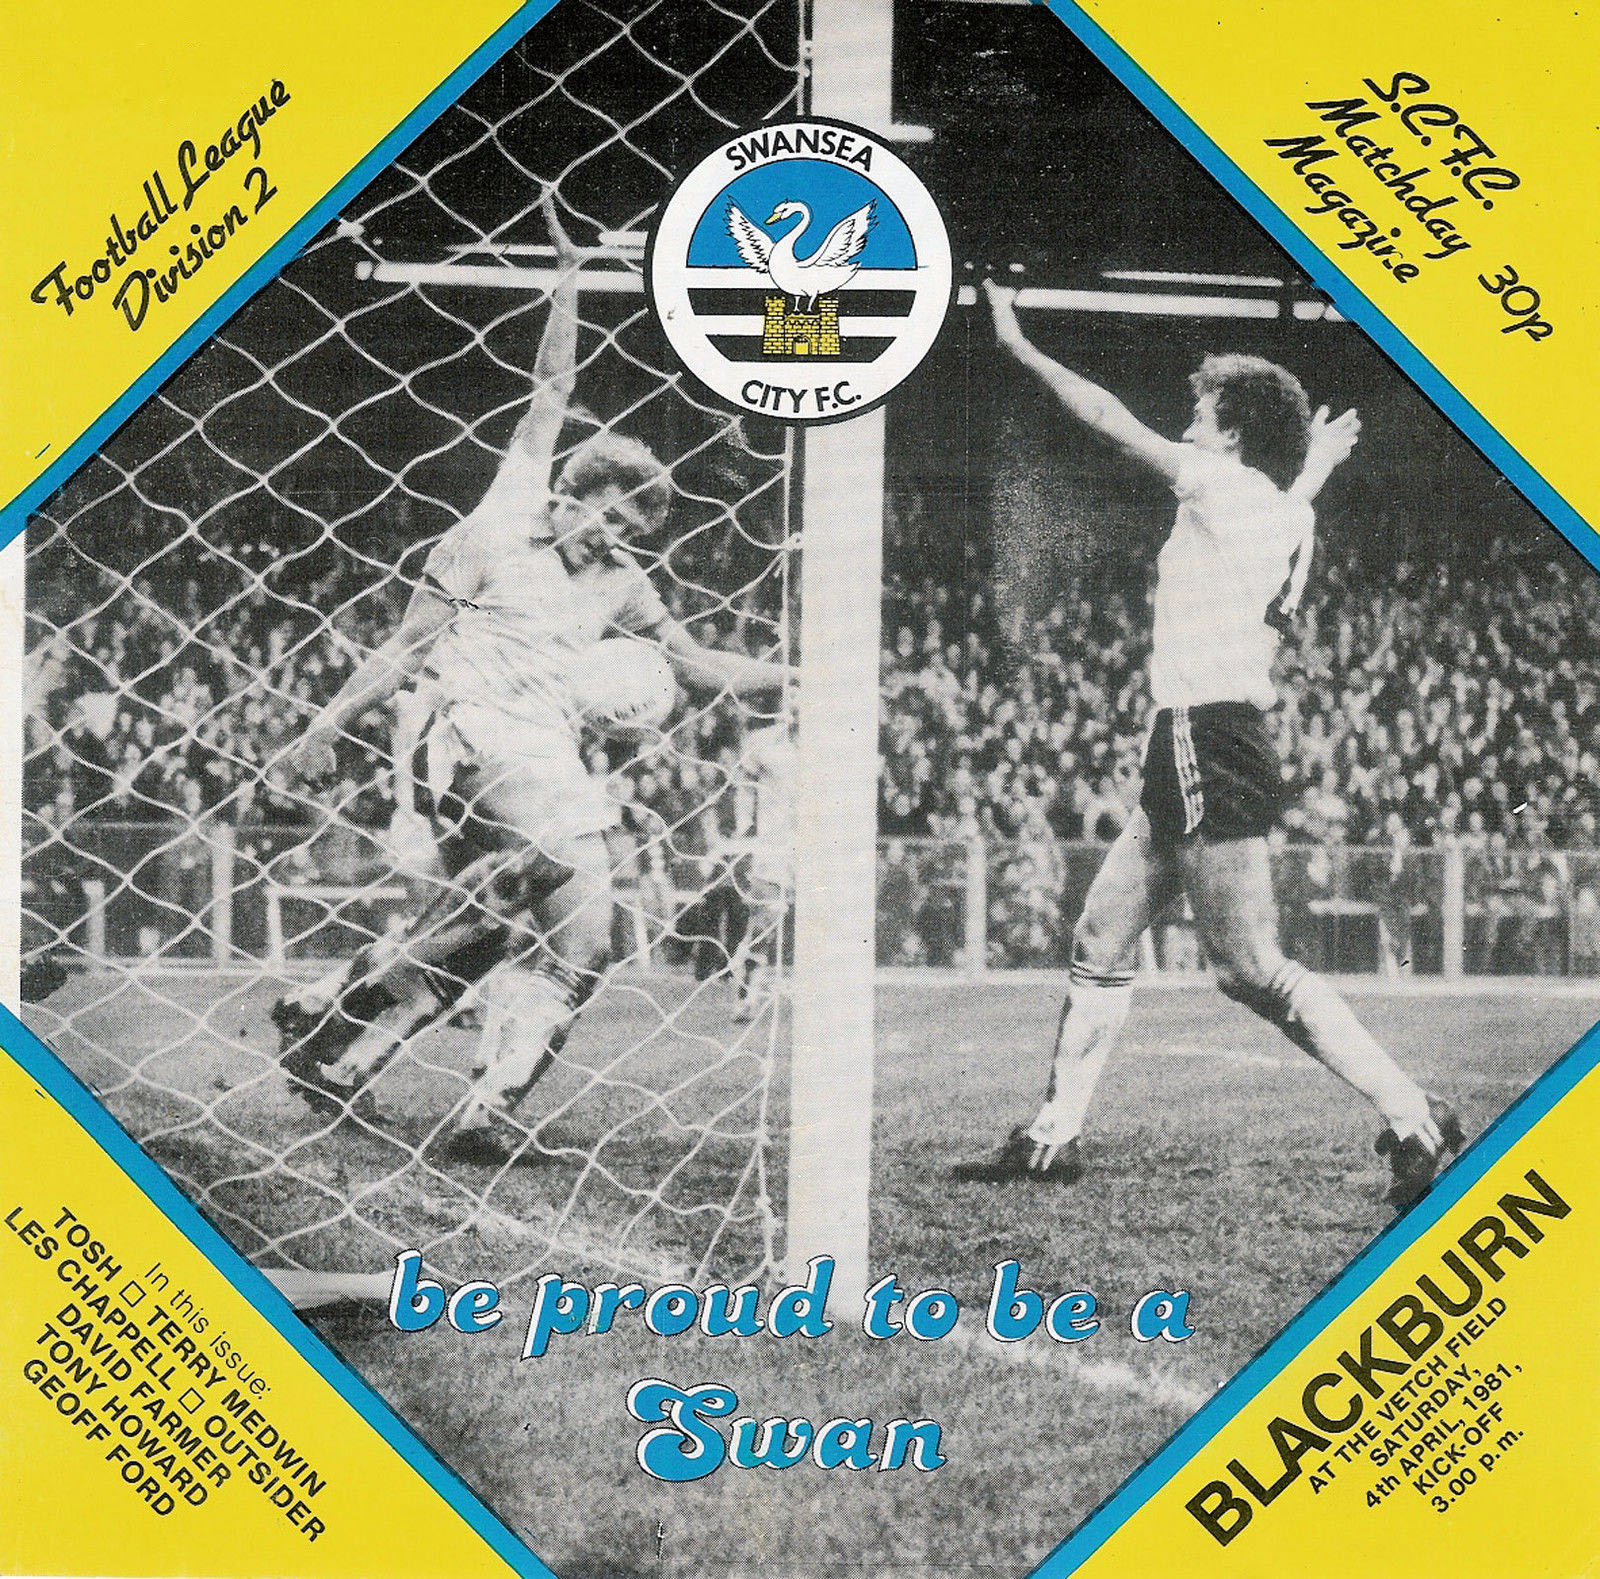 Swansea City vs. Blackburn Rovers (April 4, 1981)